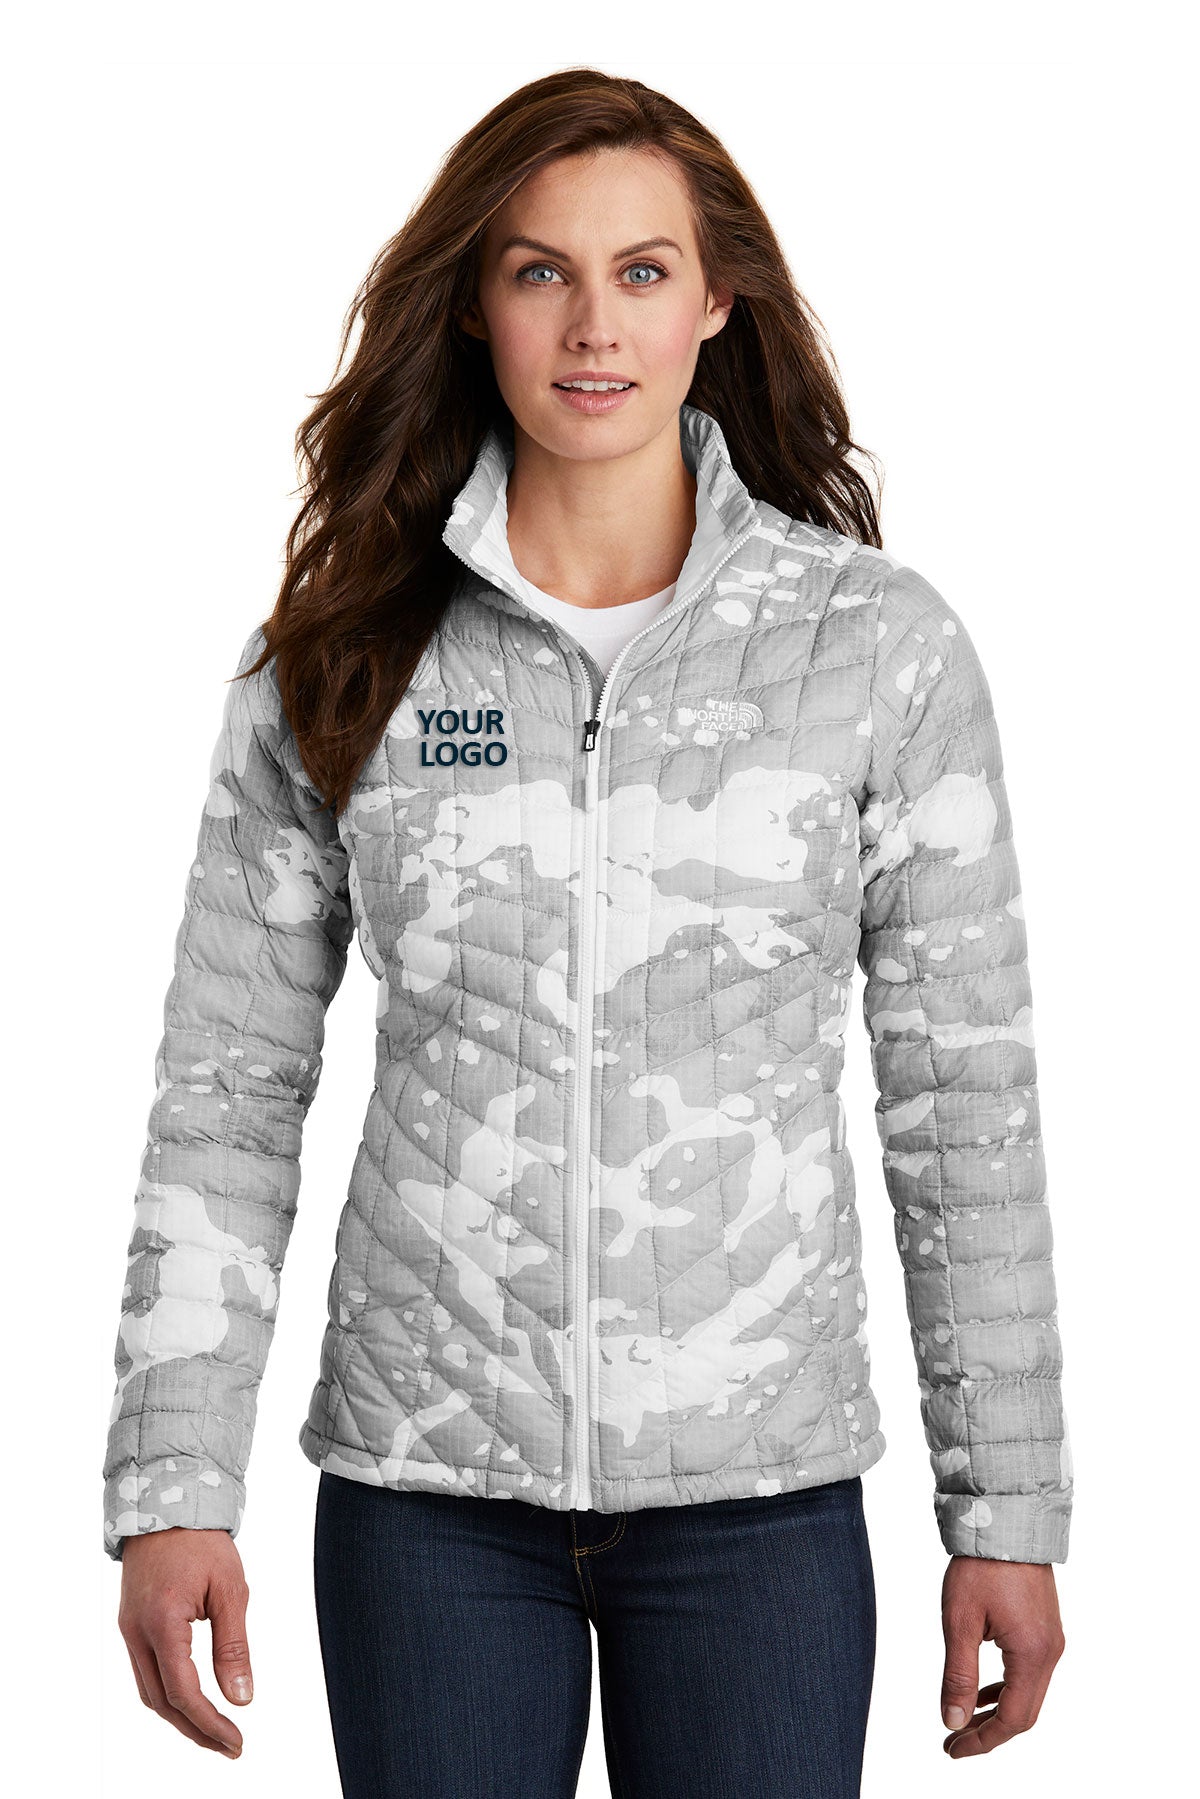 The North Face TNF White Woodchip Print NF0A3LHK company logo jackets